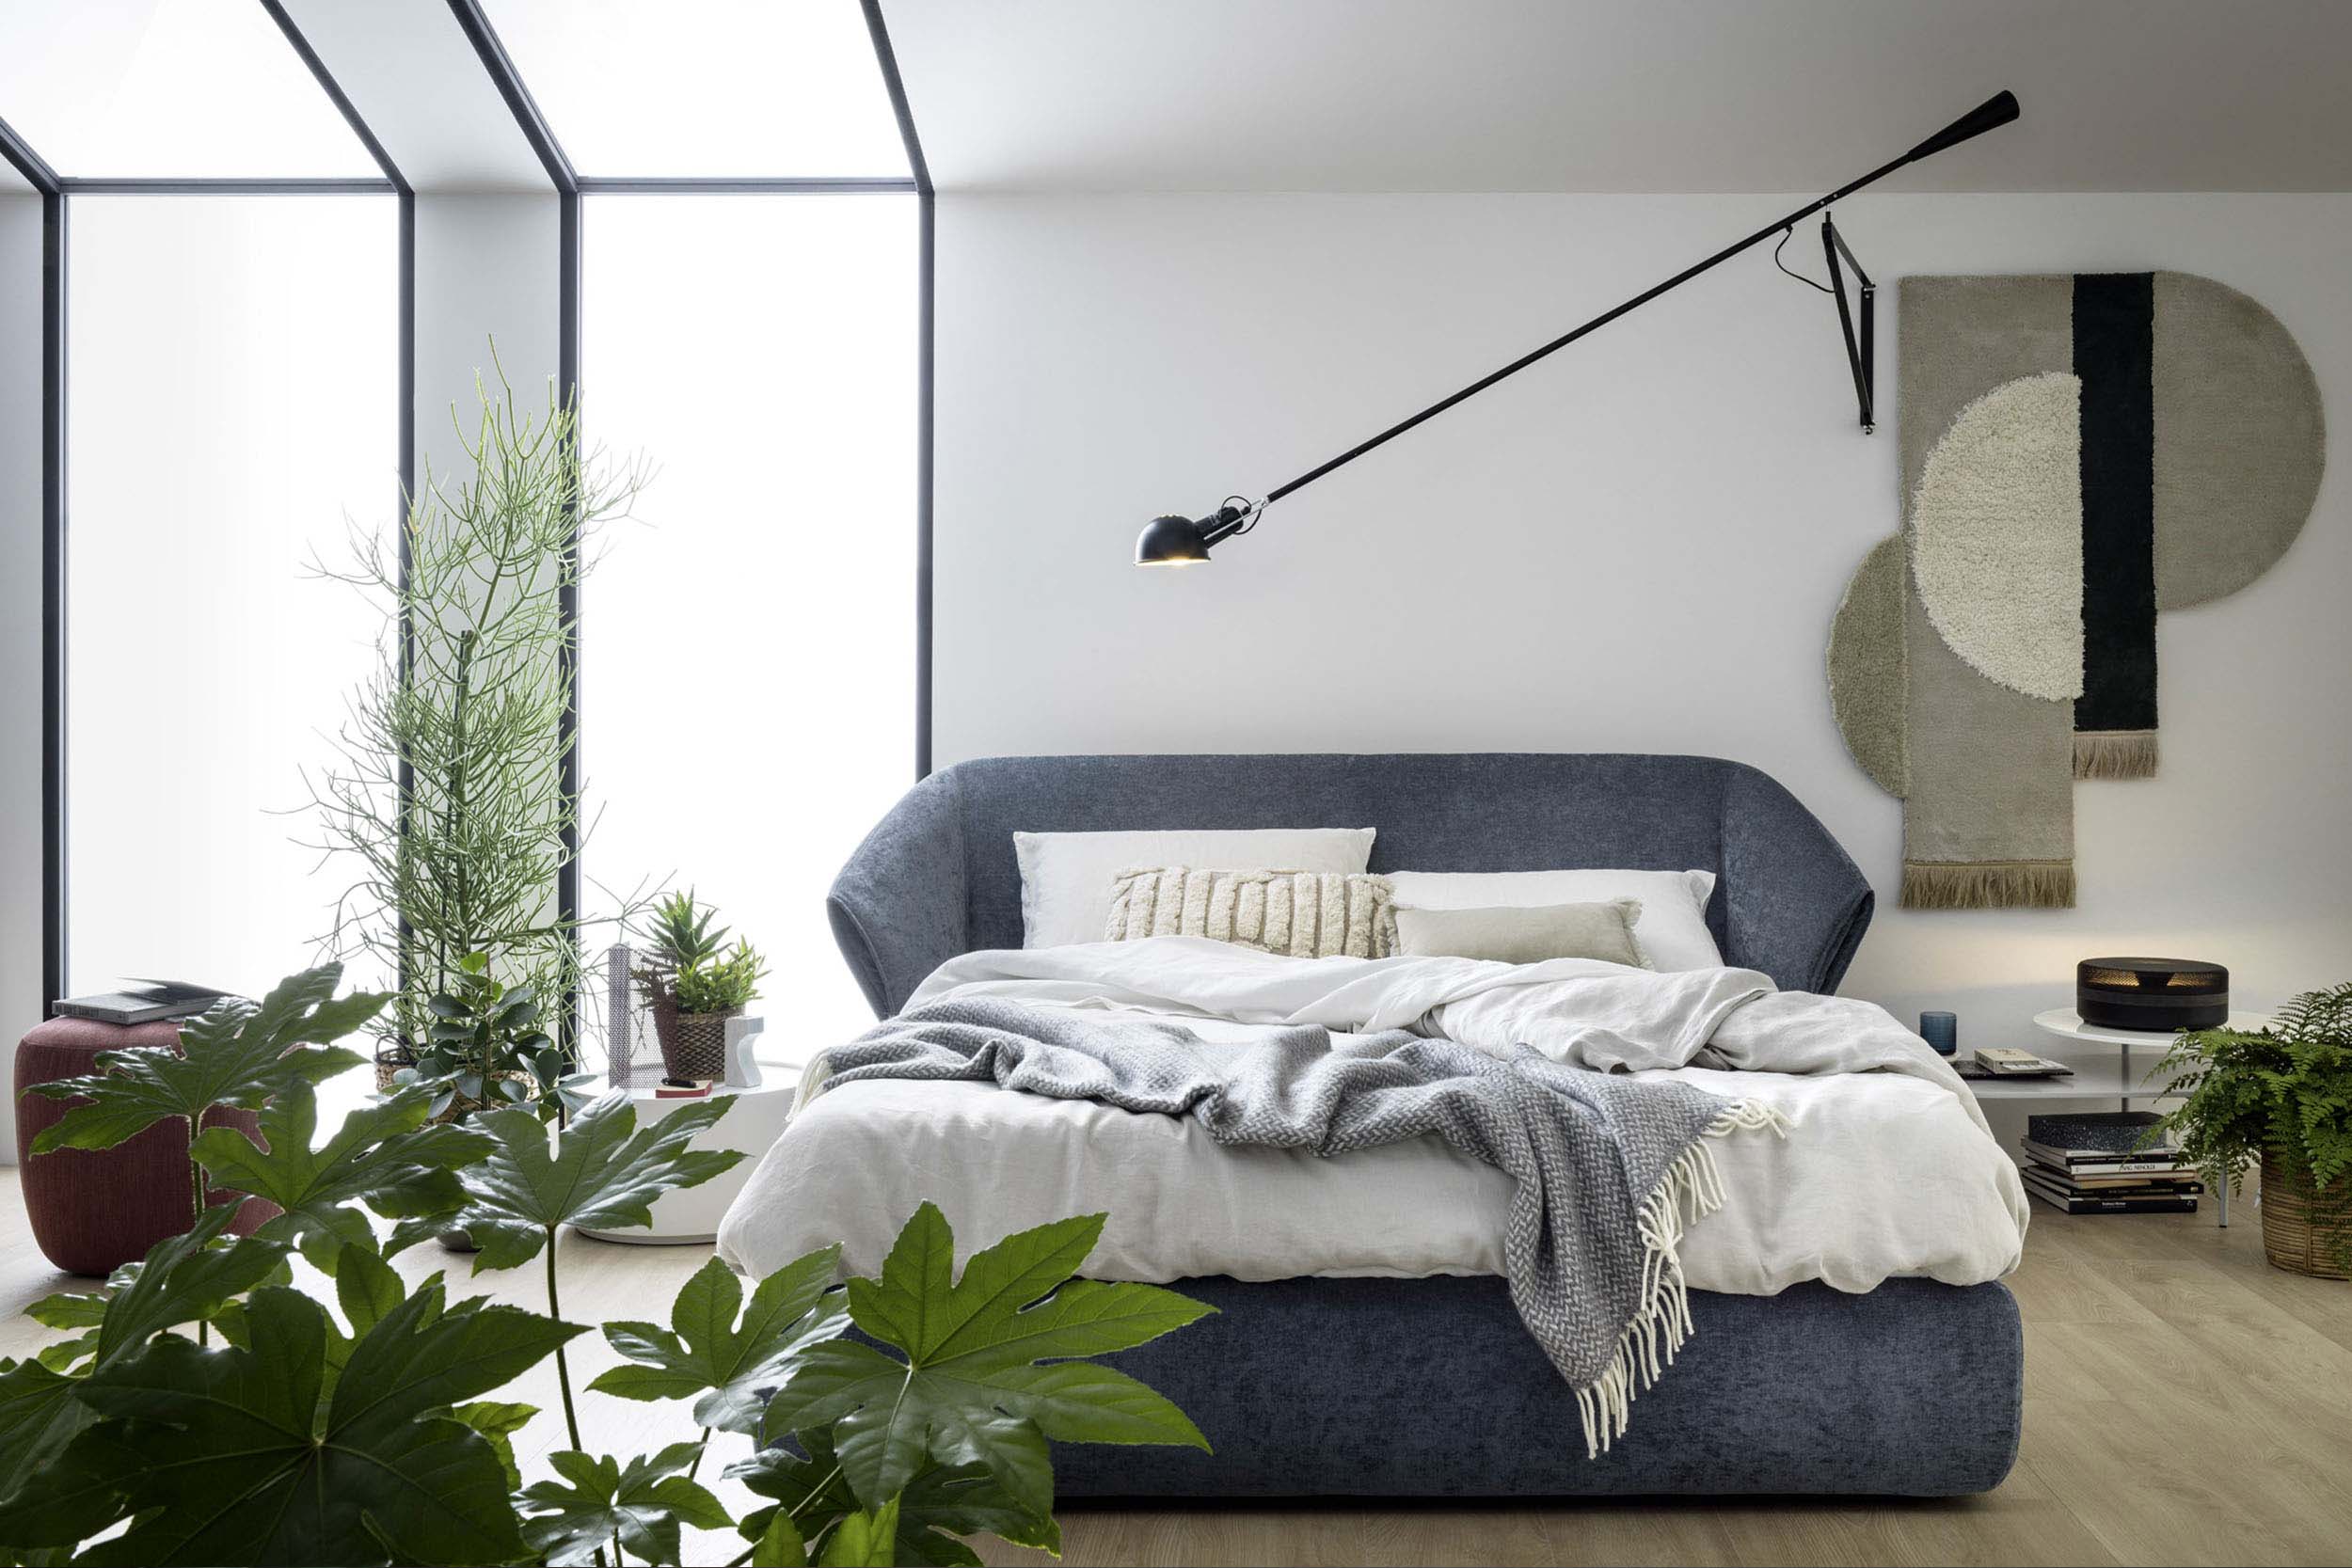 Hide luxury, modern, contemporary Italian bed by Novamobili. Sold by Krieder UK.